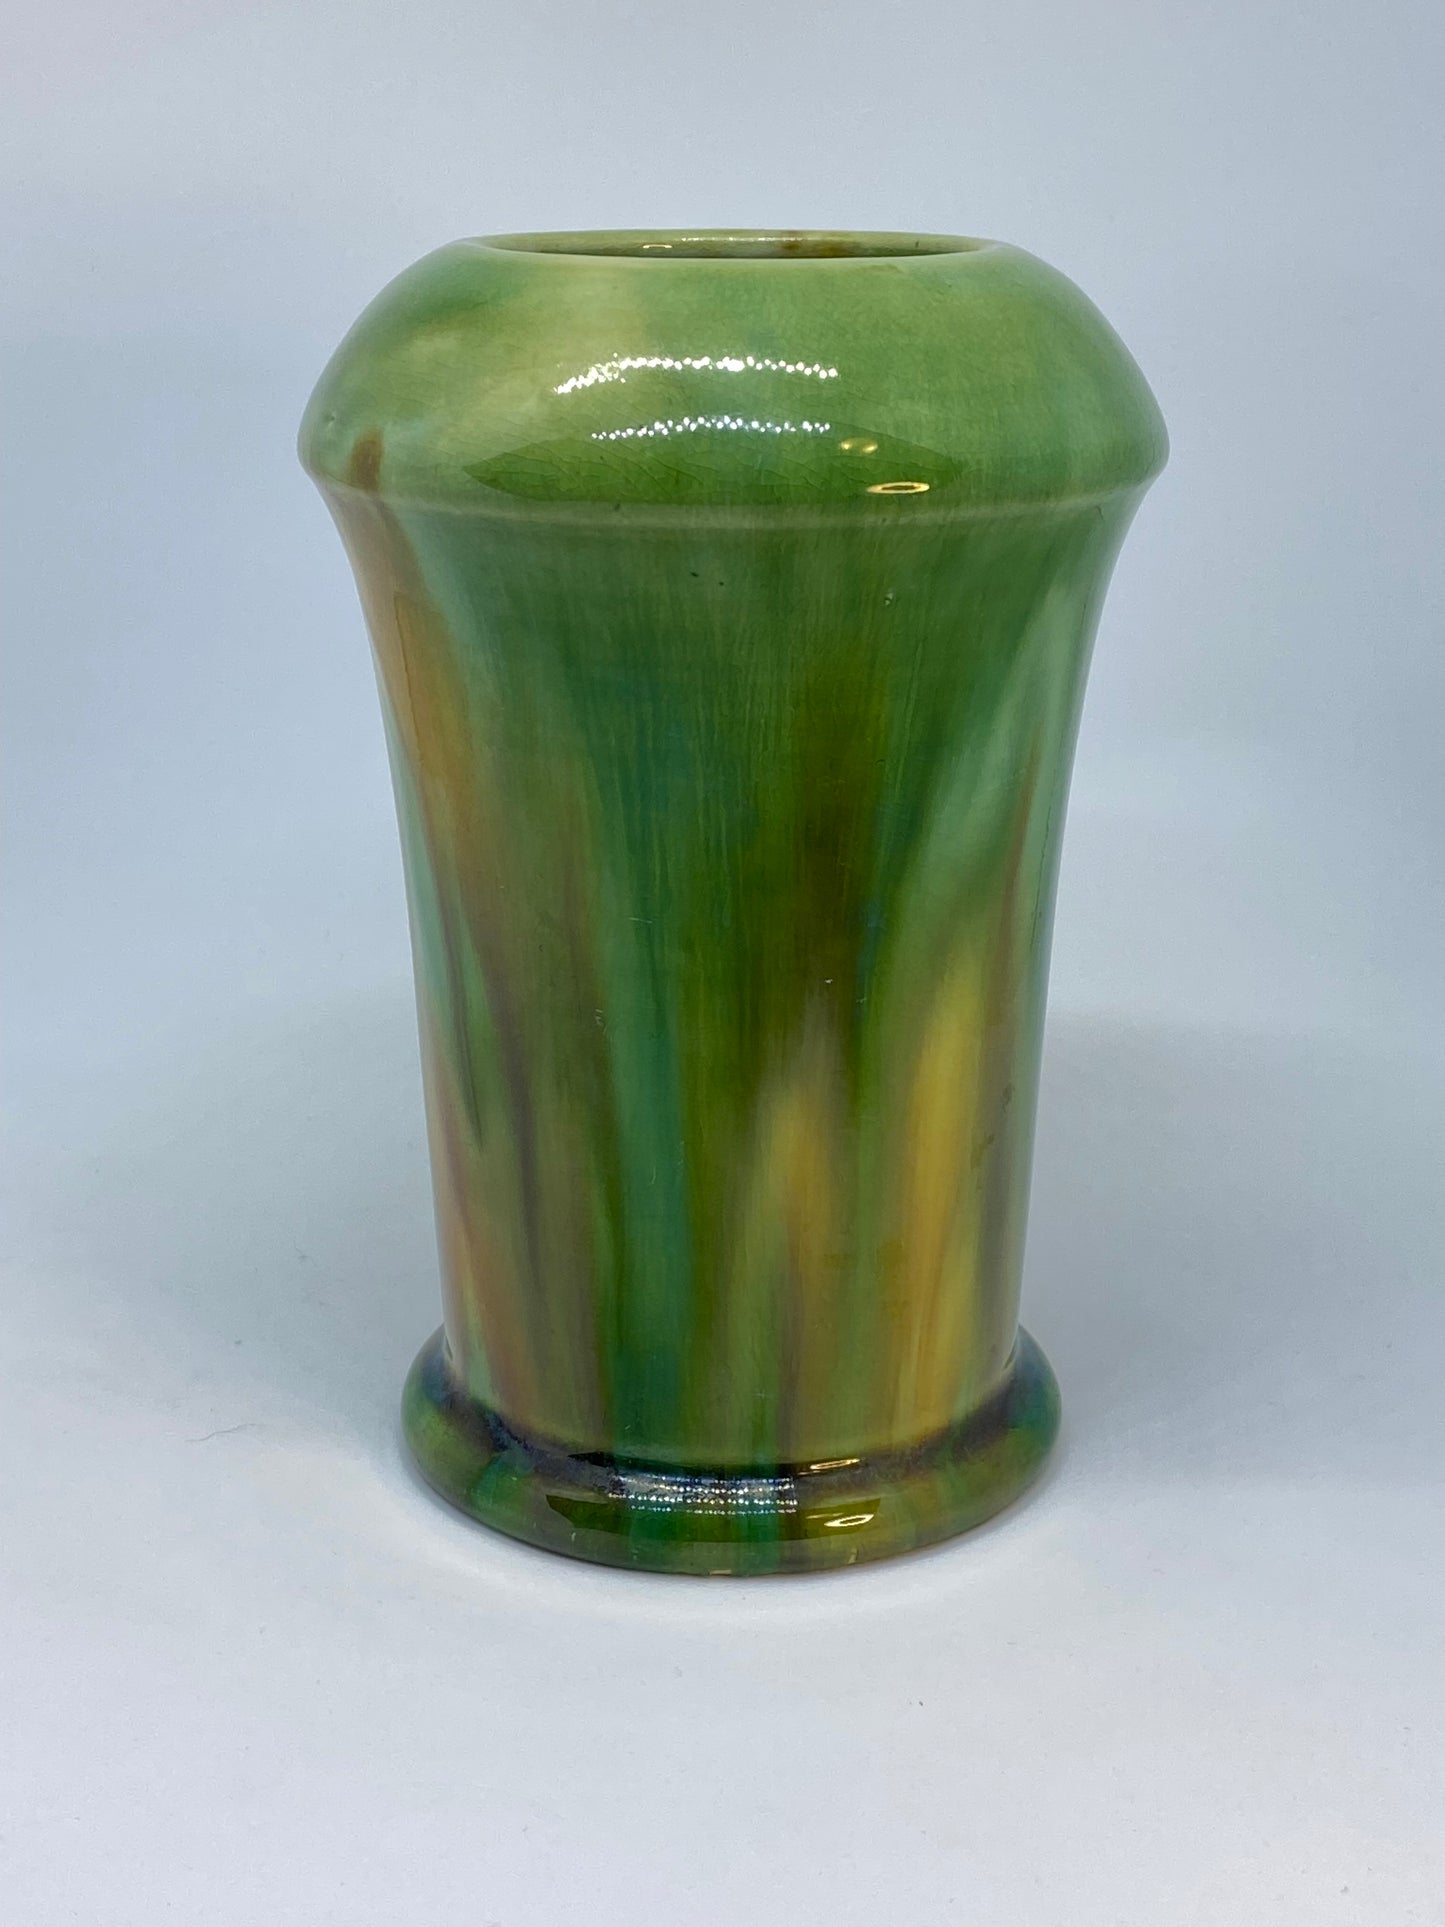 McHugh Shape 67 - gumtree green and yellow glaze - 1930s